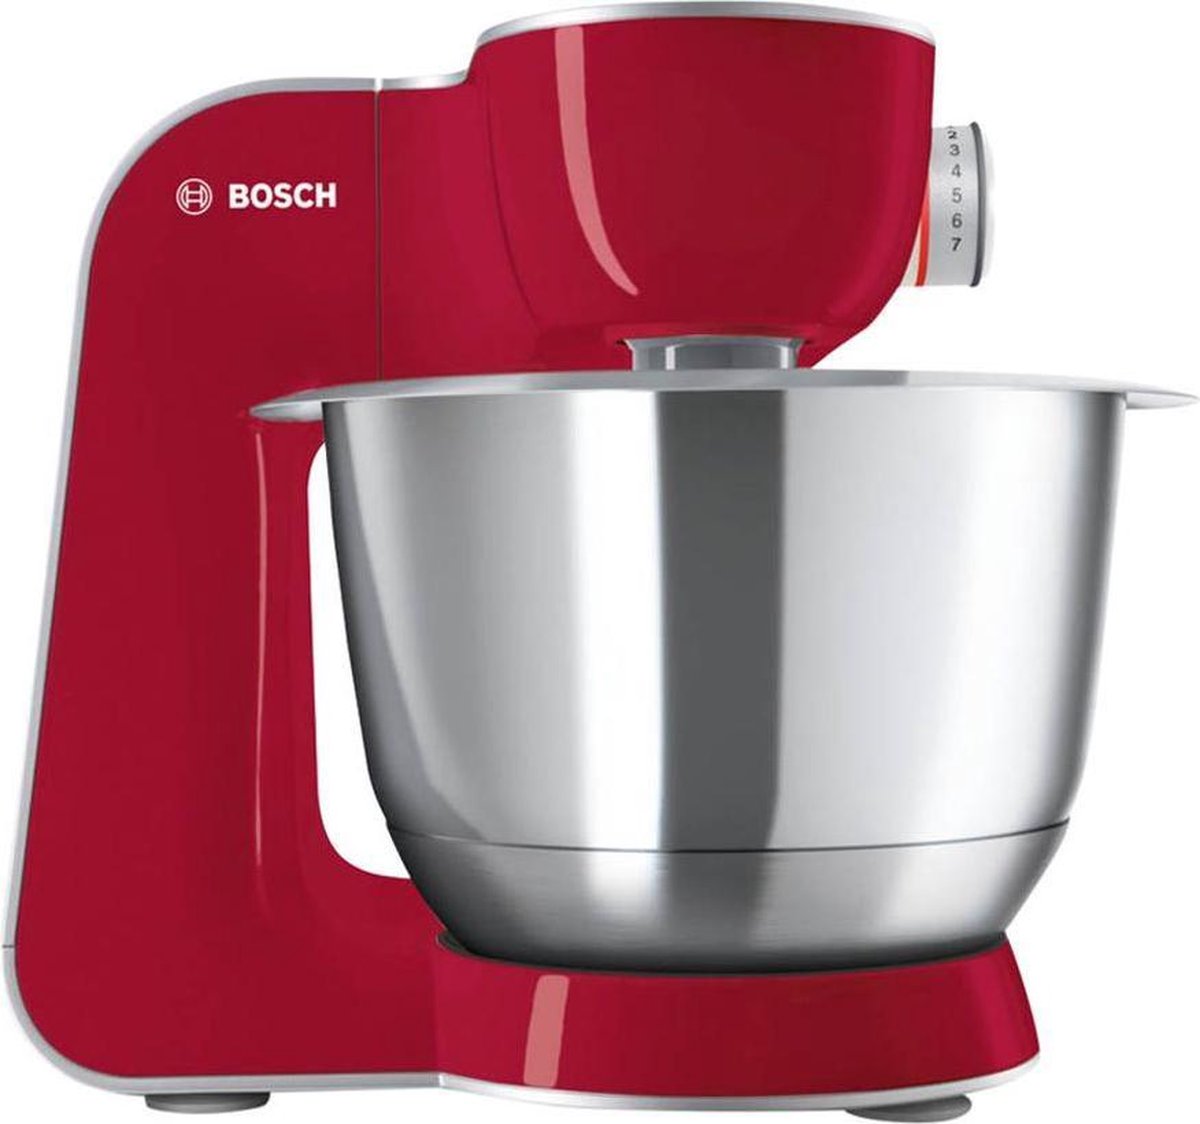 behalve voor Ontbering Ramen wassen Bosch MUM5 CreationLine MUM58720 - Keukenmachine - Rood | bol.com